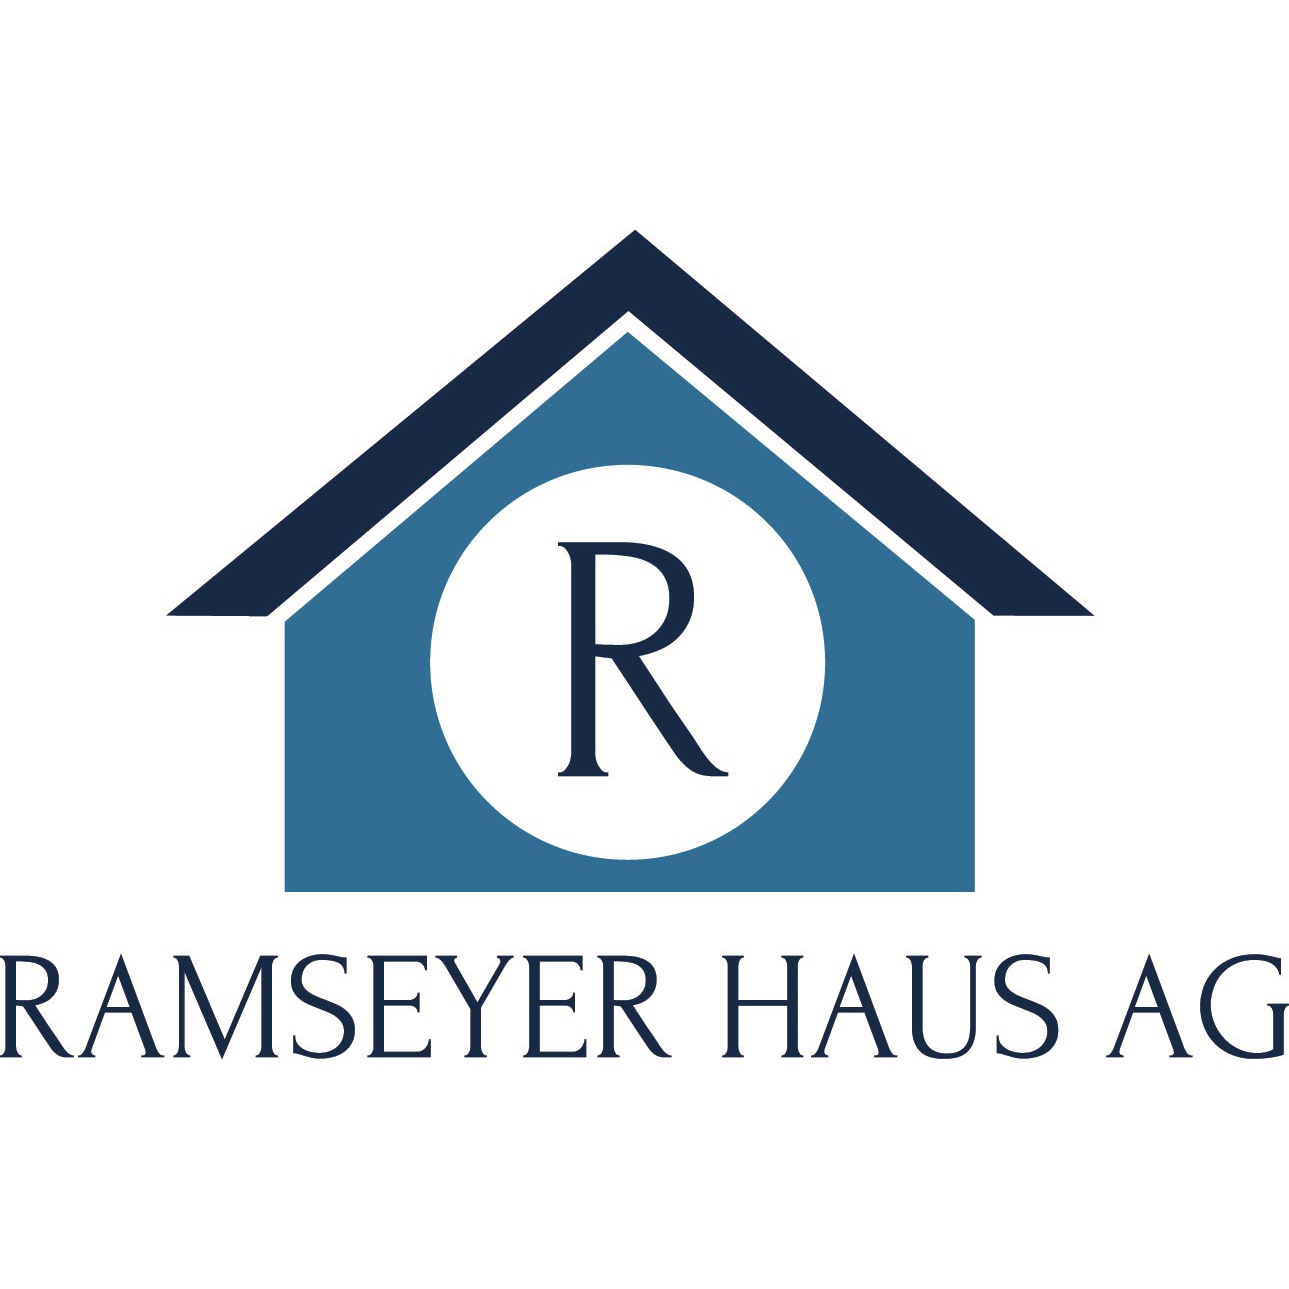 Ramseyer Haus AG